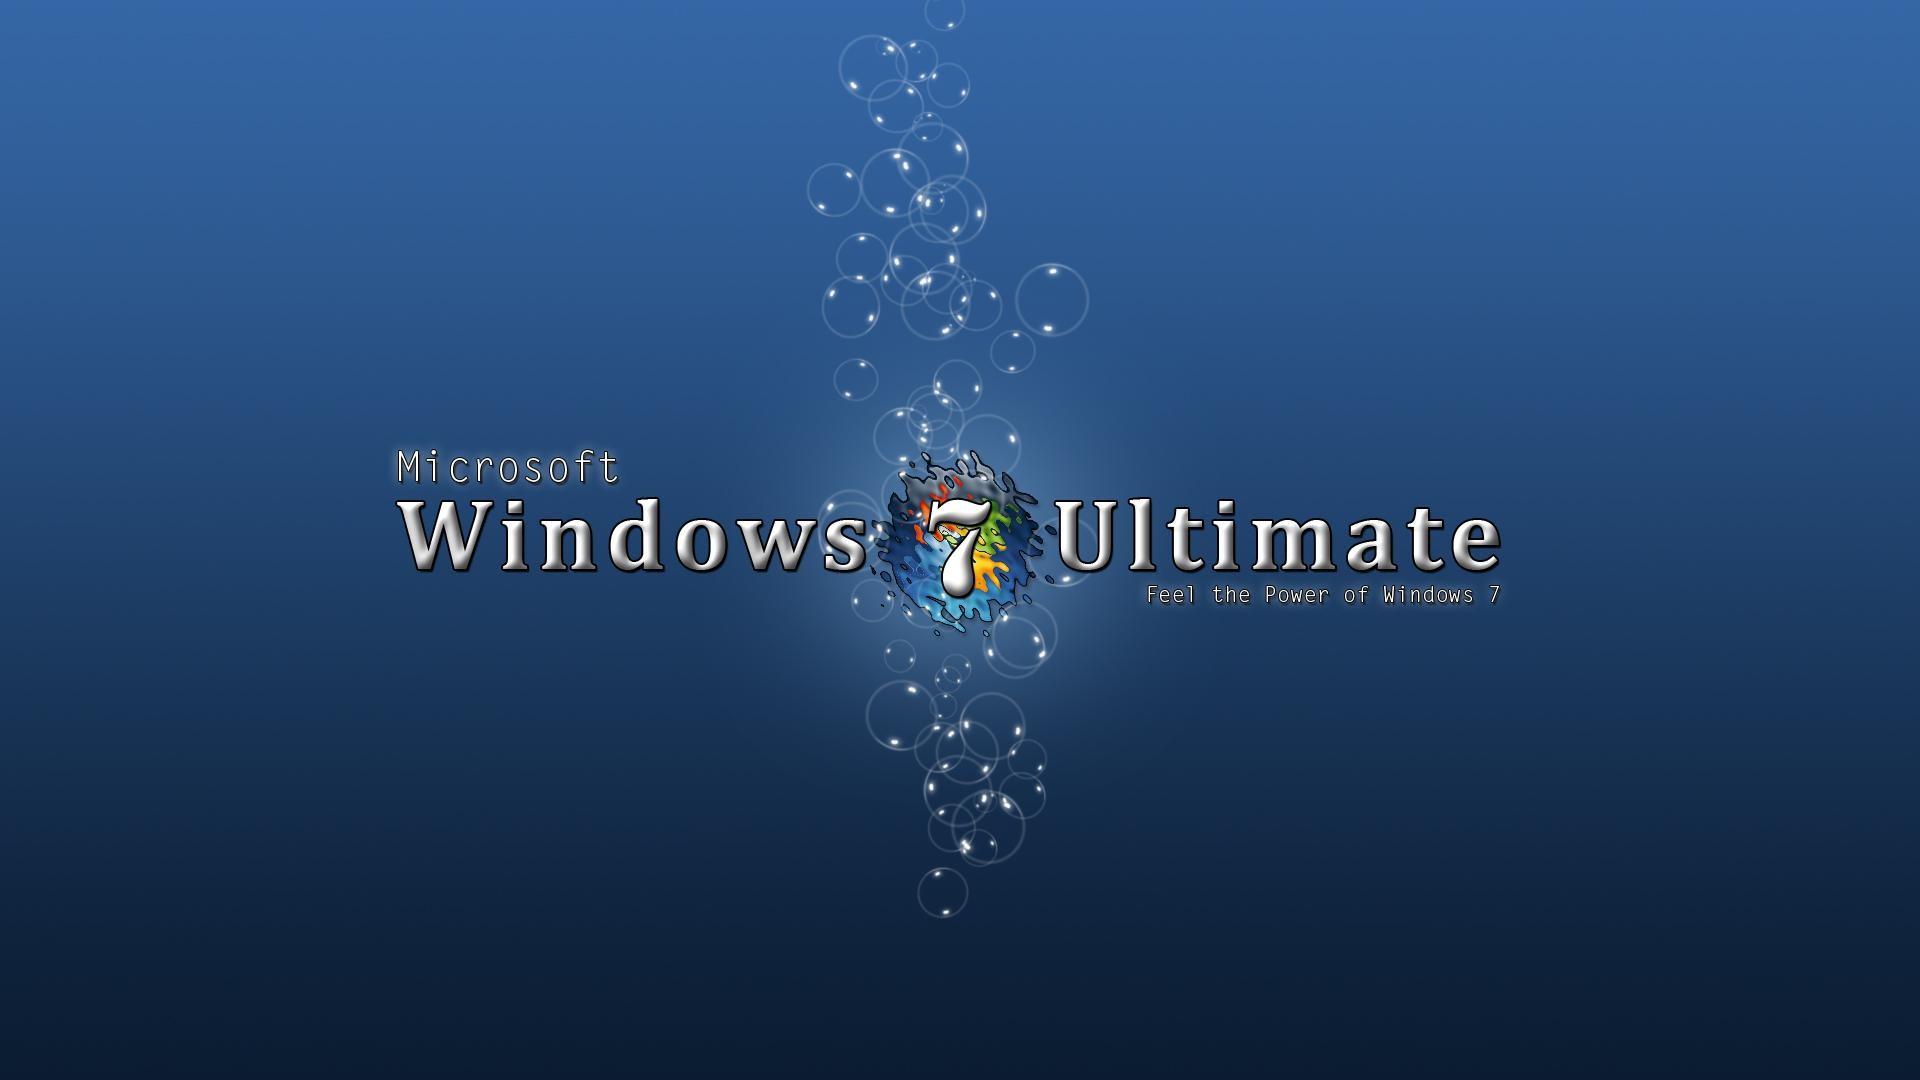 Windows 7 Ultimate Wallpaper 1280x800